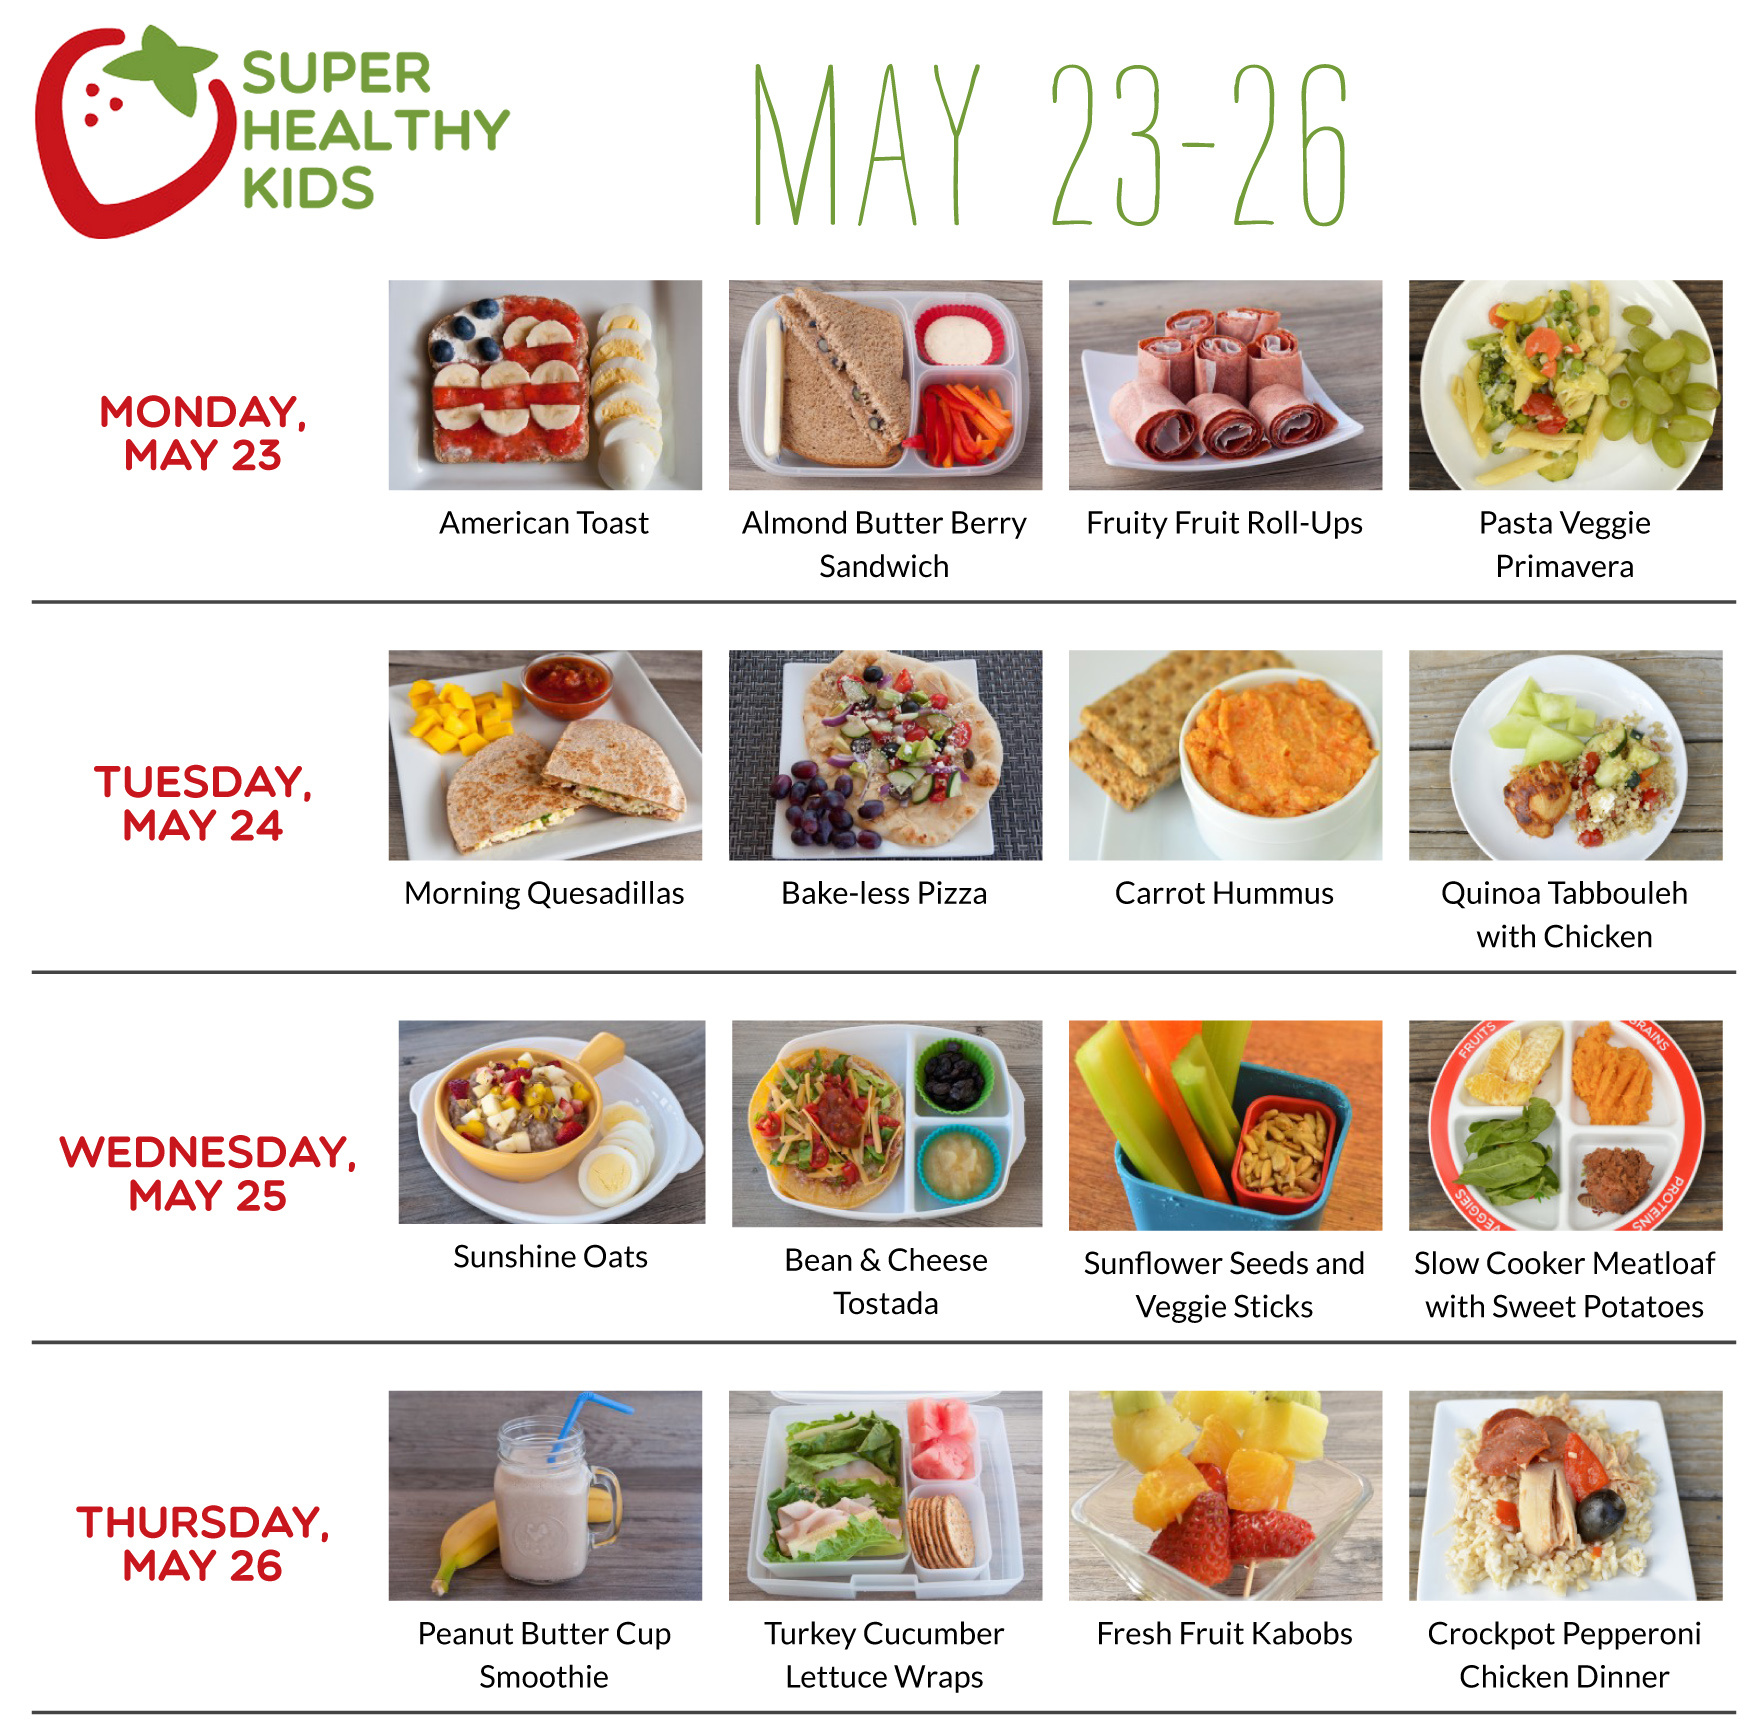 May 23-29 | Super Healthy Kids